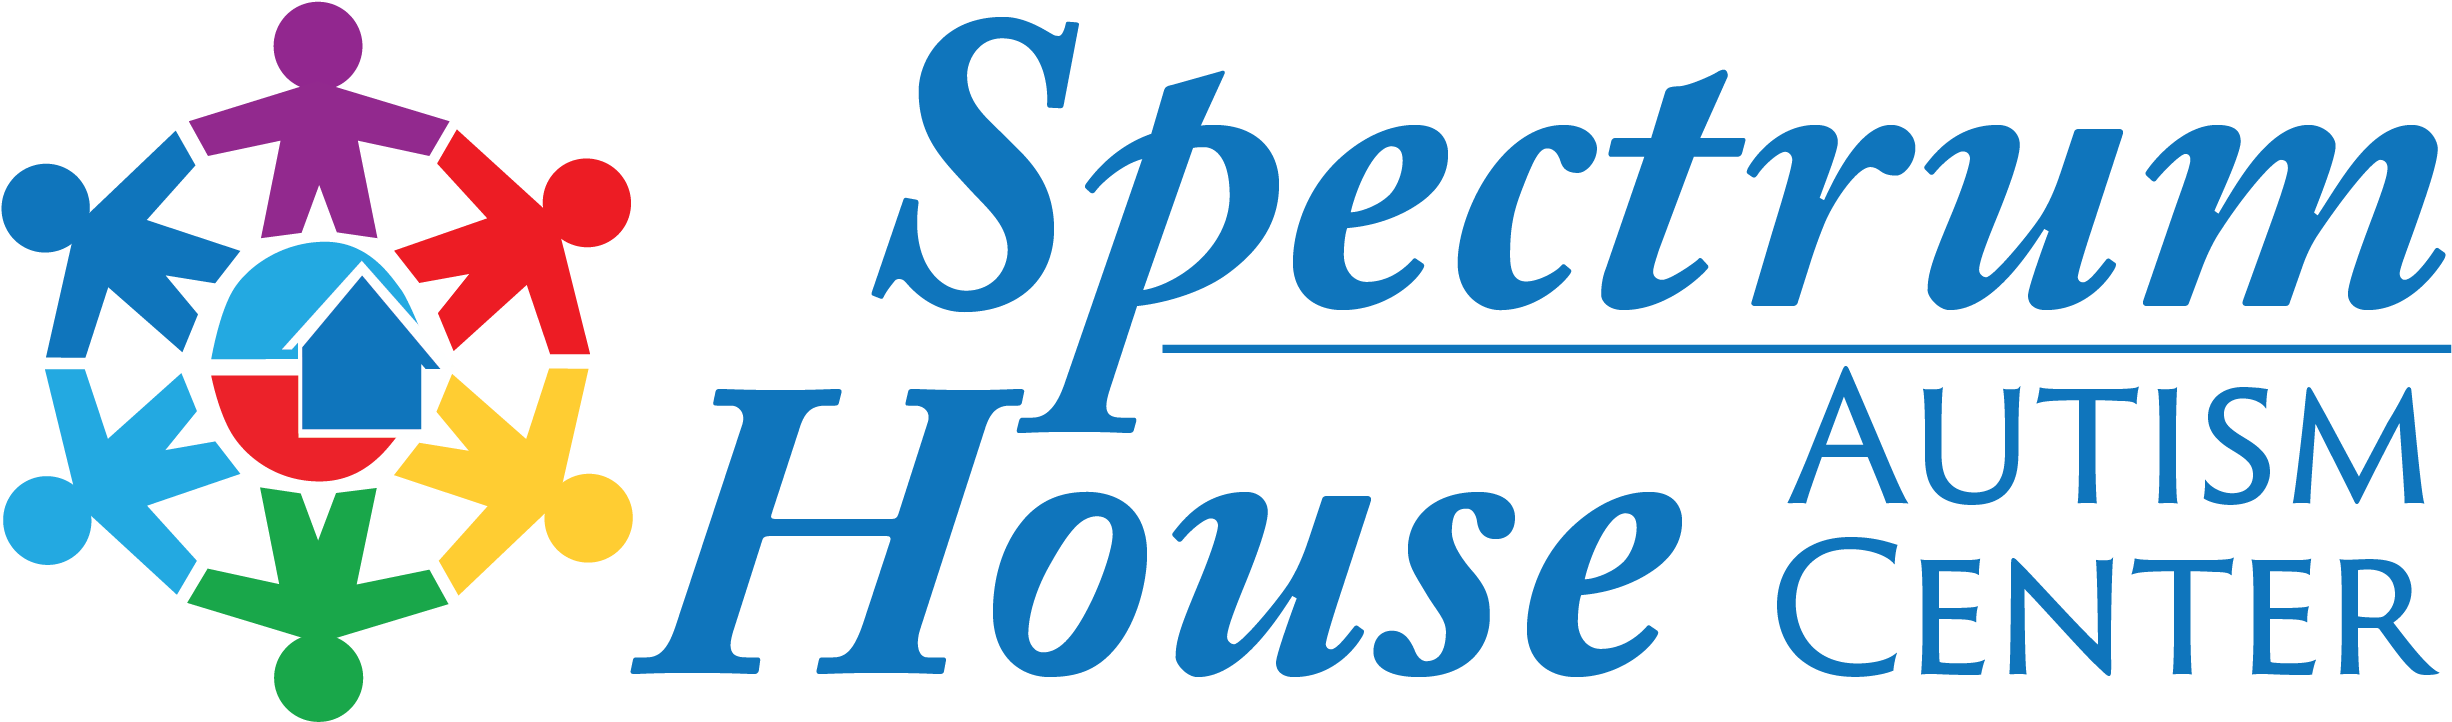 Spectrum House Logo Updated 1 17 Trans - Spectrum House Autism Center Logo Clipart (2516x820), Png Download